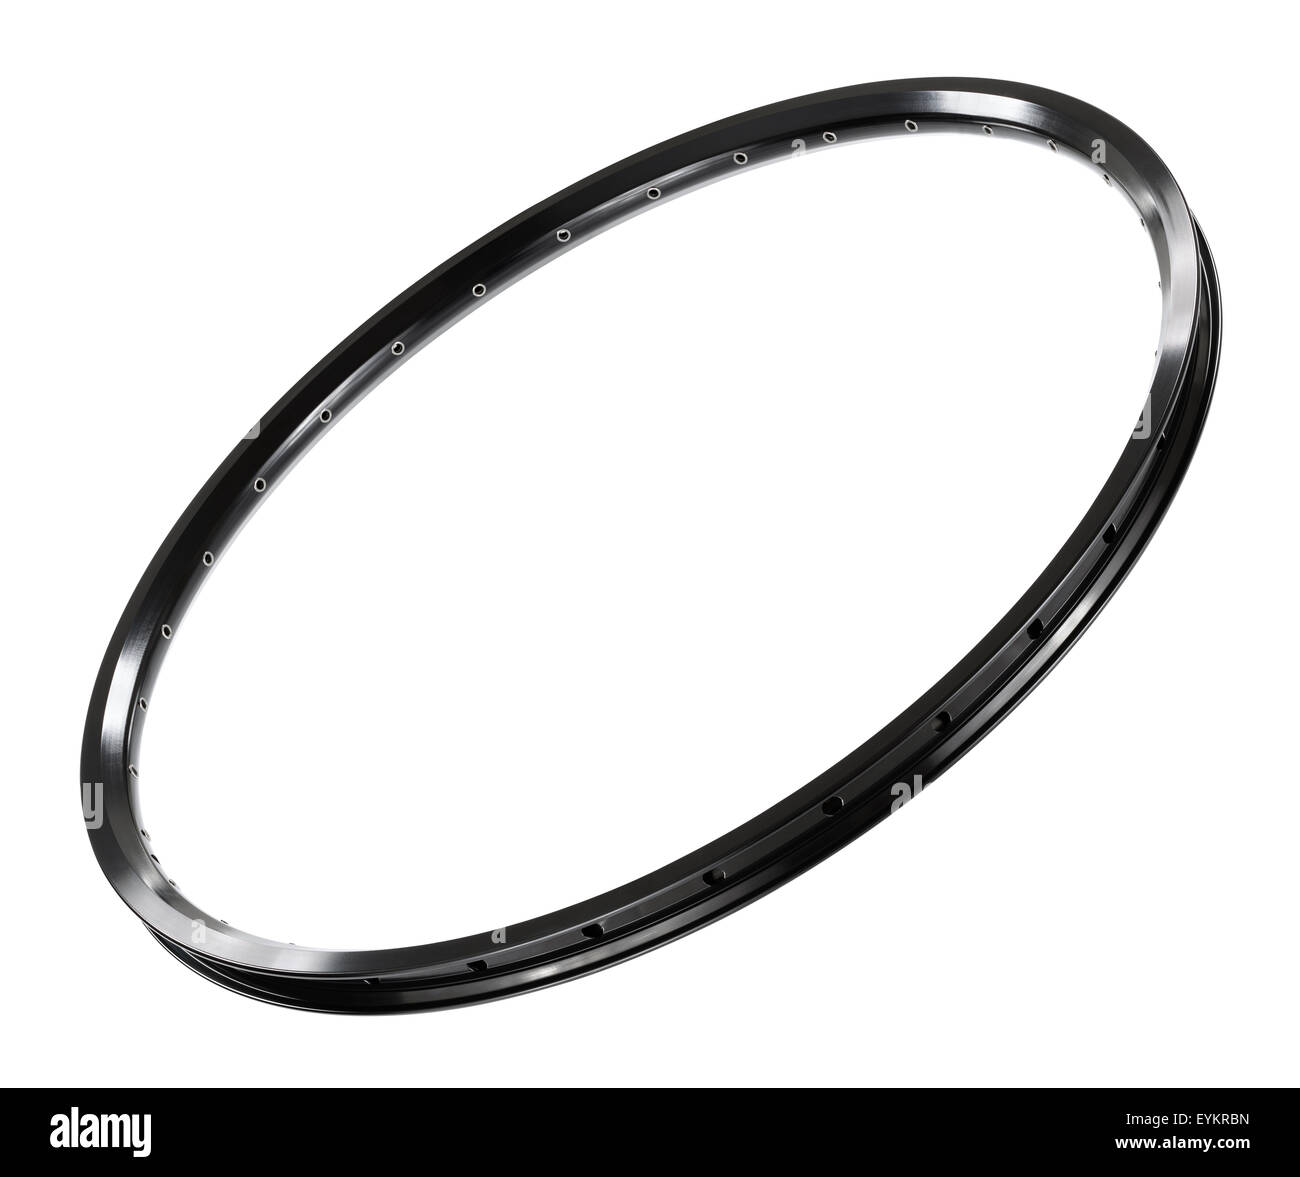 Top quality black alloy bicycle rim Stock Photo